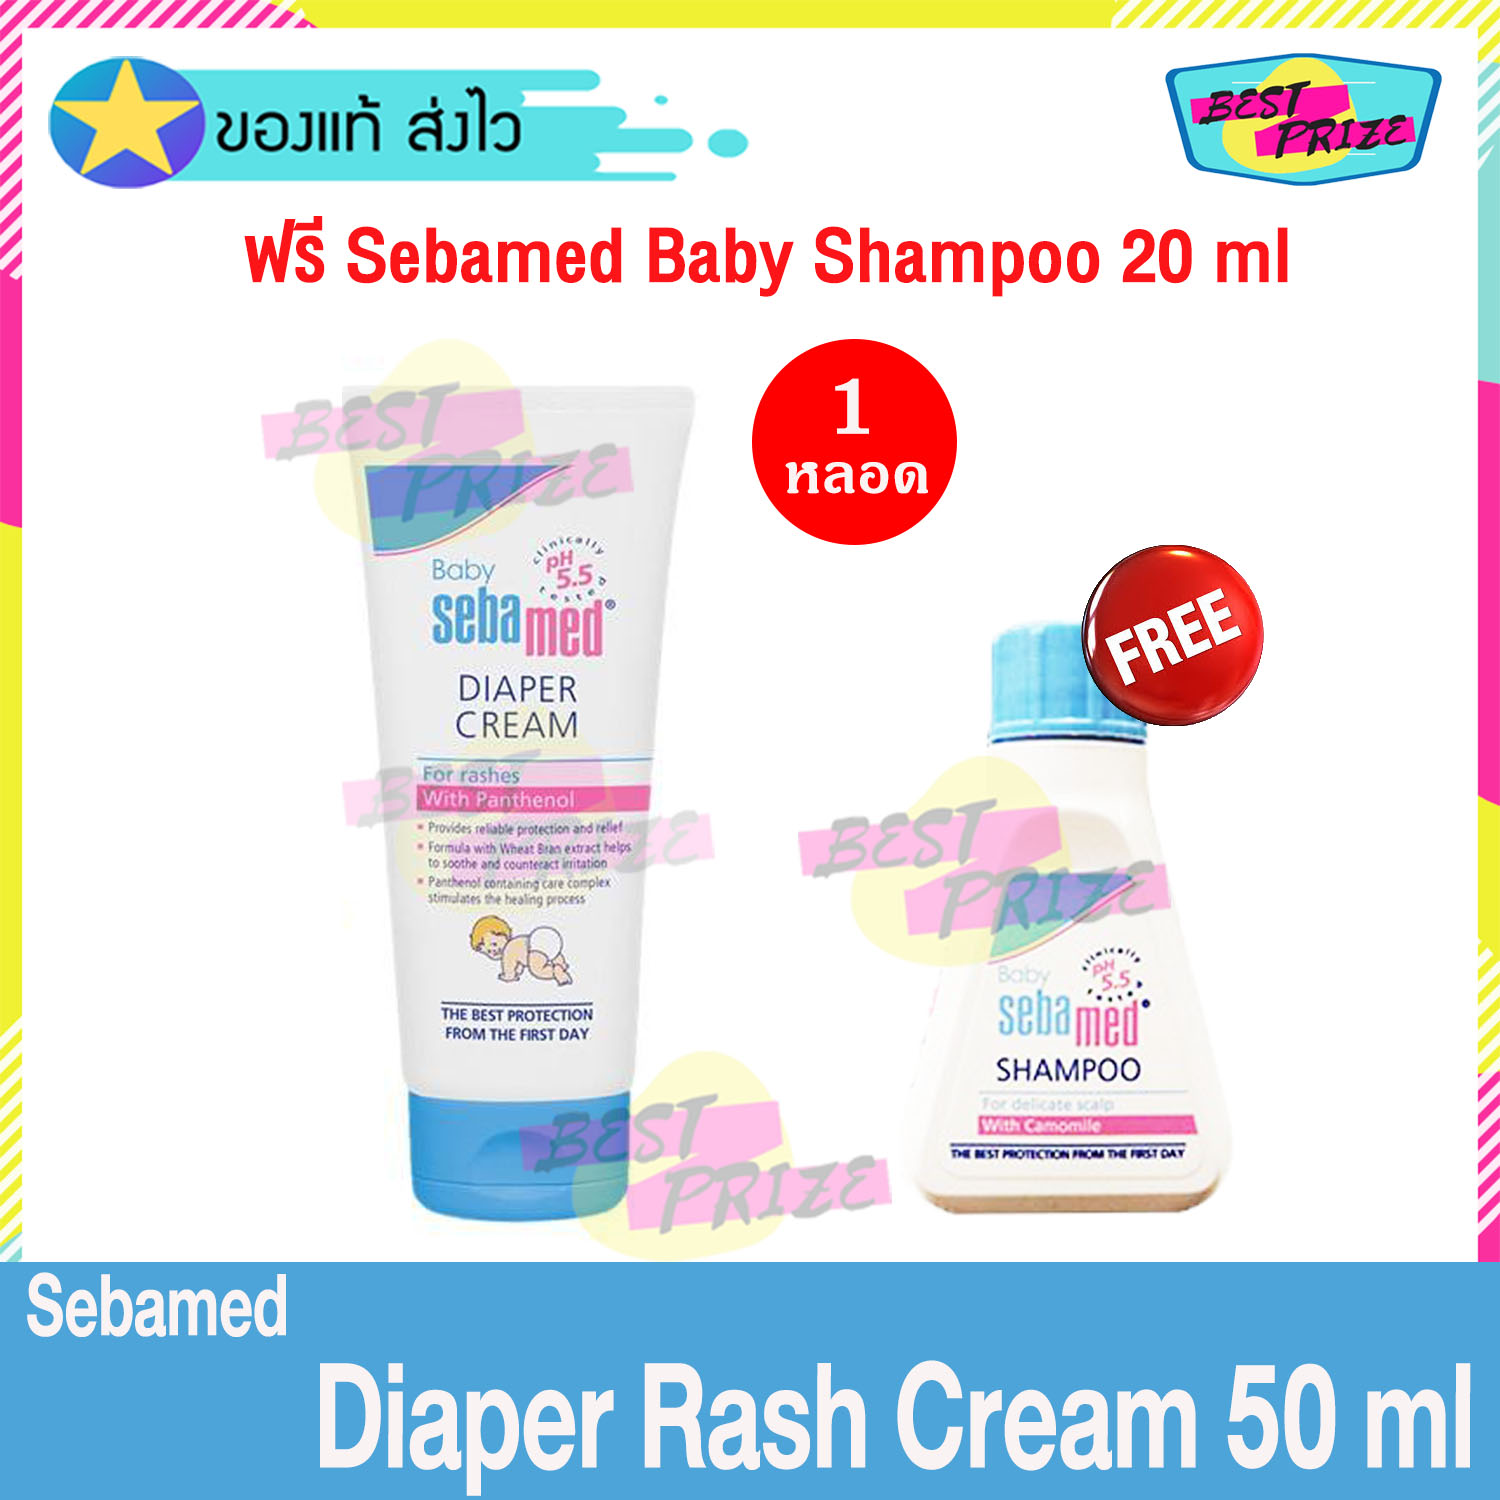 Sebamed Baby Diaper Rash Cream 50 ml (จำนวน 1 หลอด) แถมฟรี Sebamed Shampoo 20 ml (1 หลอด) ซีบาเมด เบบี้ ครีม ครีมทาผิว ครีมทาผิวกาย ครีมทาผื่นผ้าอ้อม ครีมทาก้นเด็ก